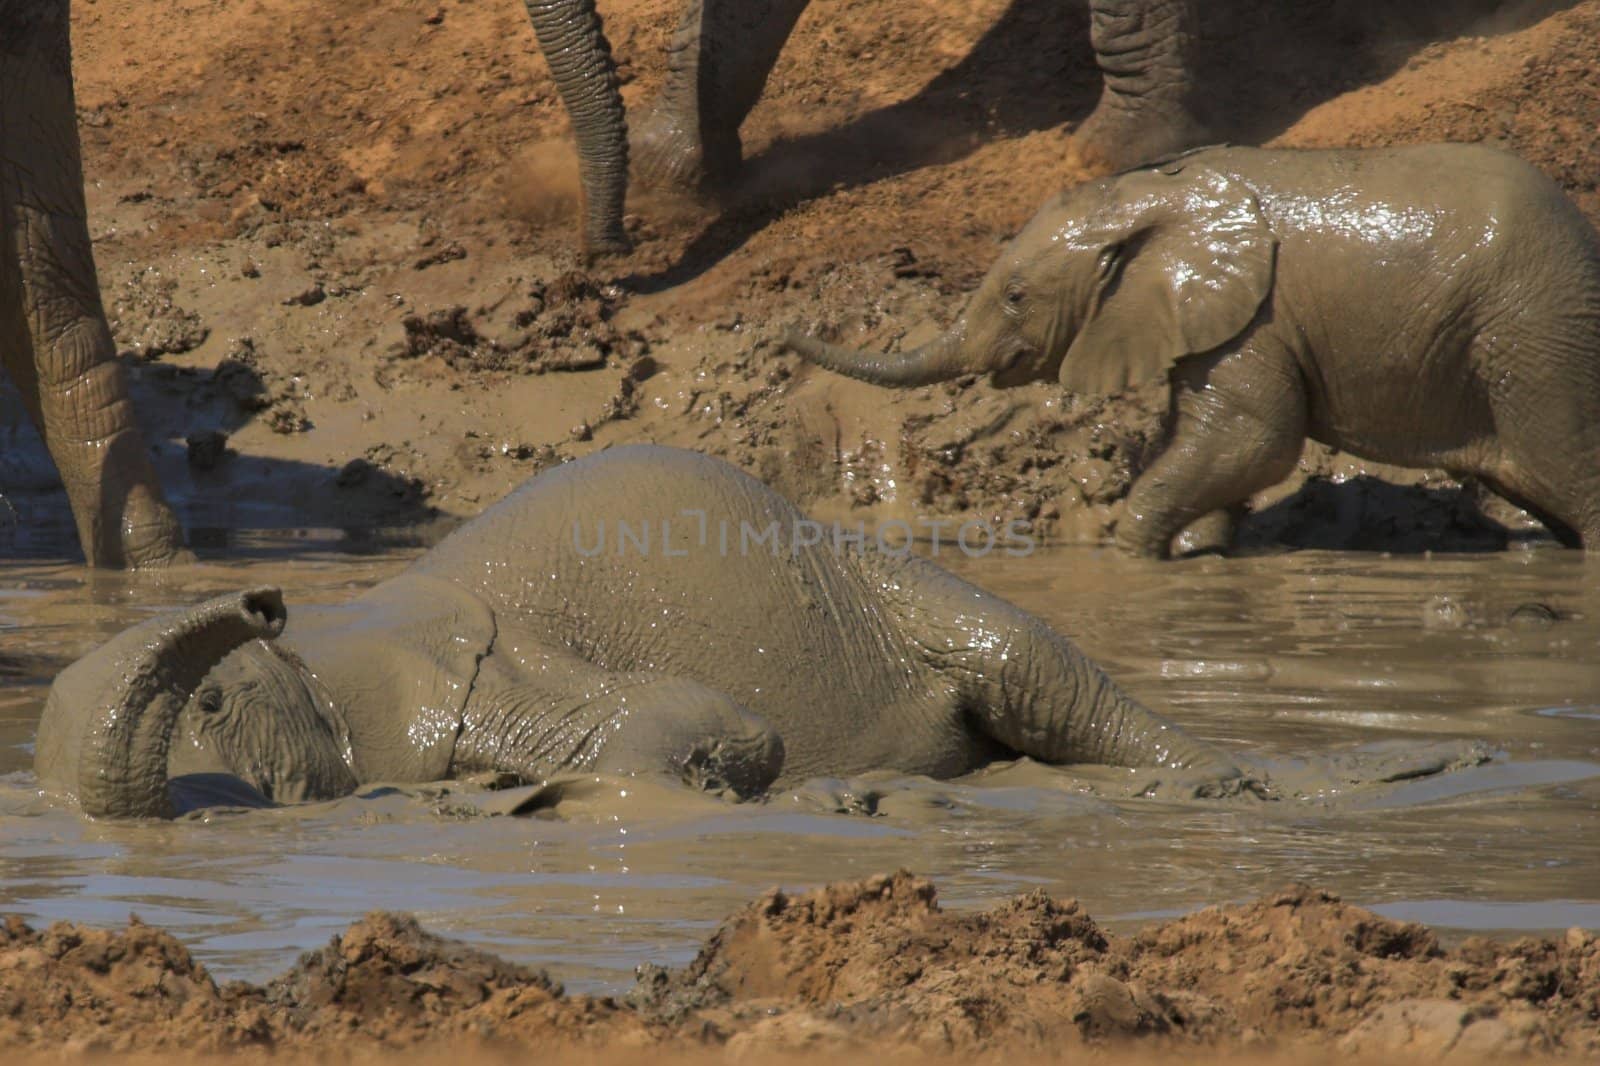 Elephants having a mud bath